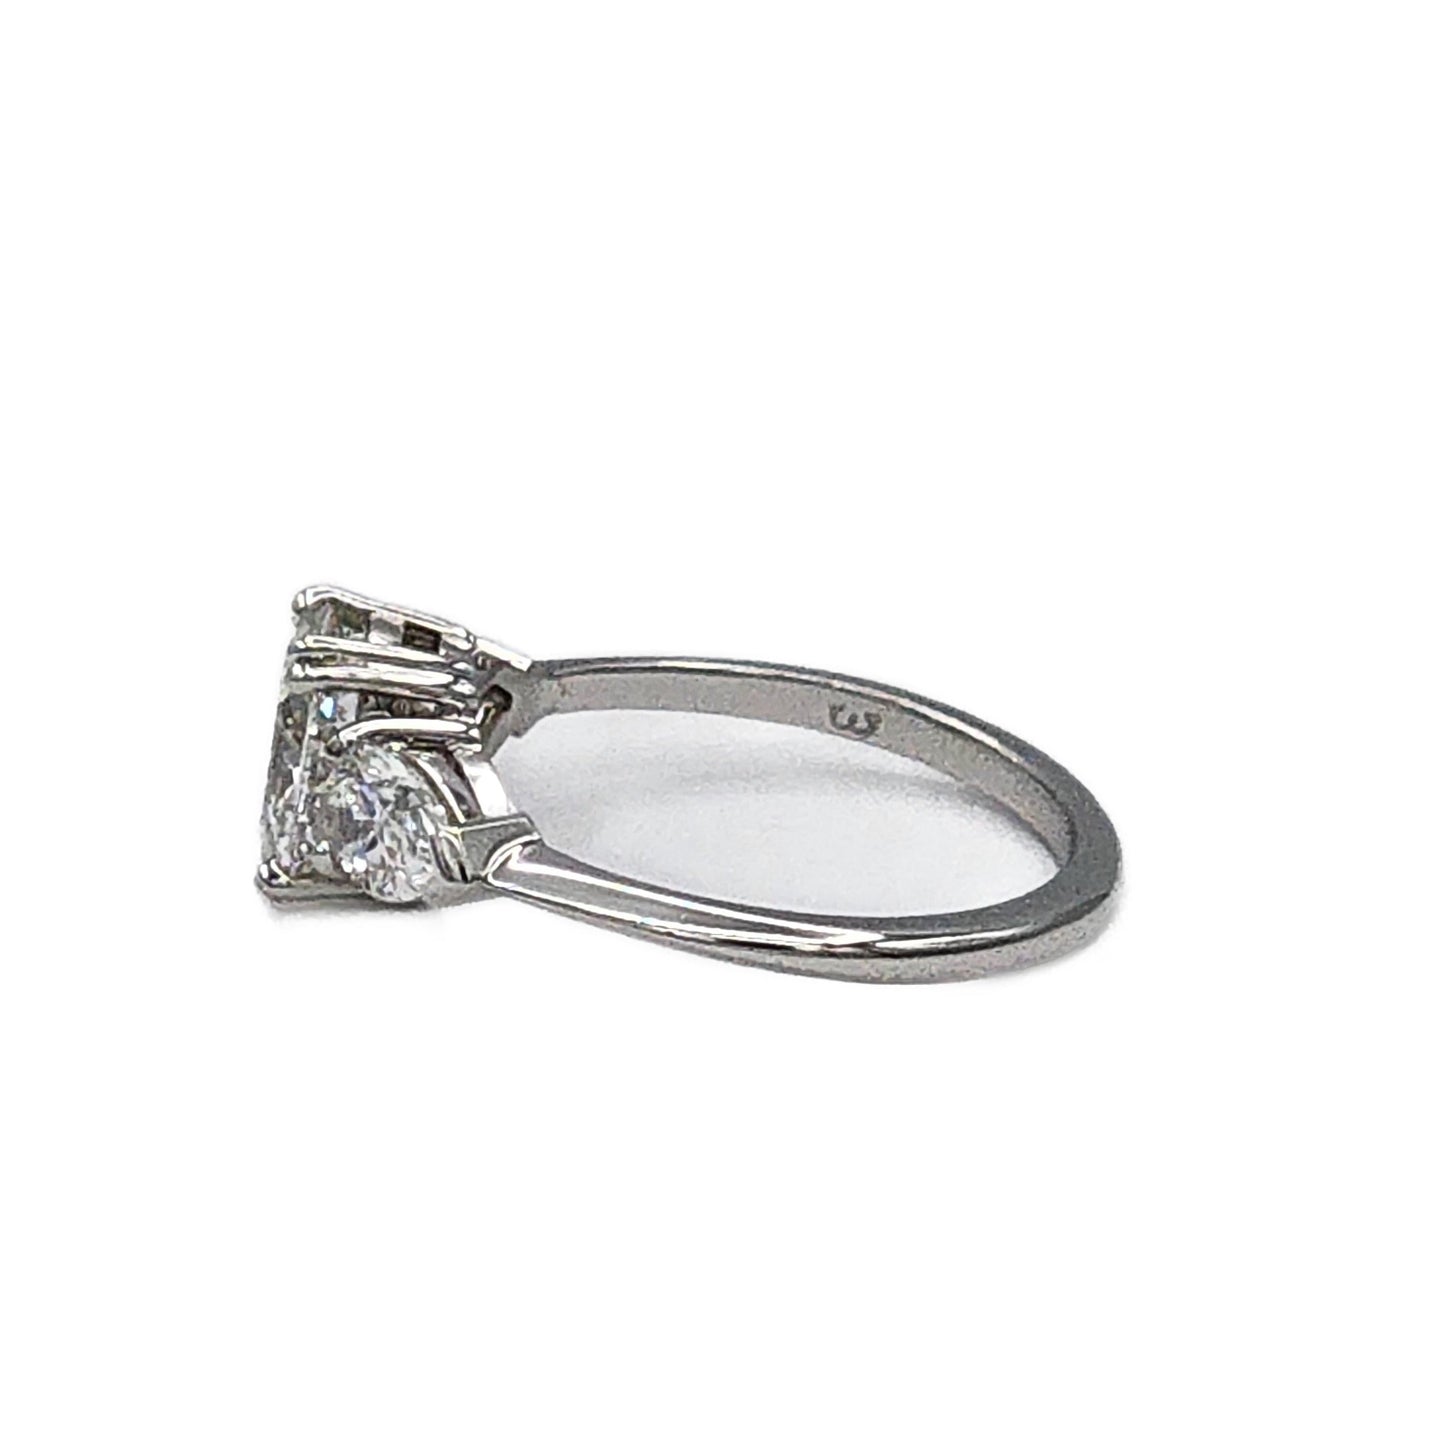 1.13 Carat G/SI1 Oval Cut Diamond with 2=0.80 Carat Pear Shape Diamonds Handmade in Platinum, GIA Report